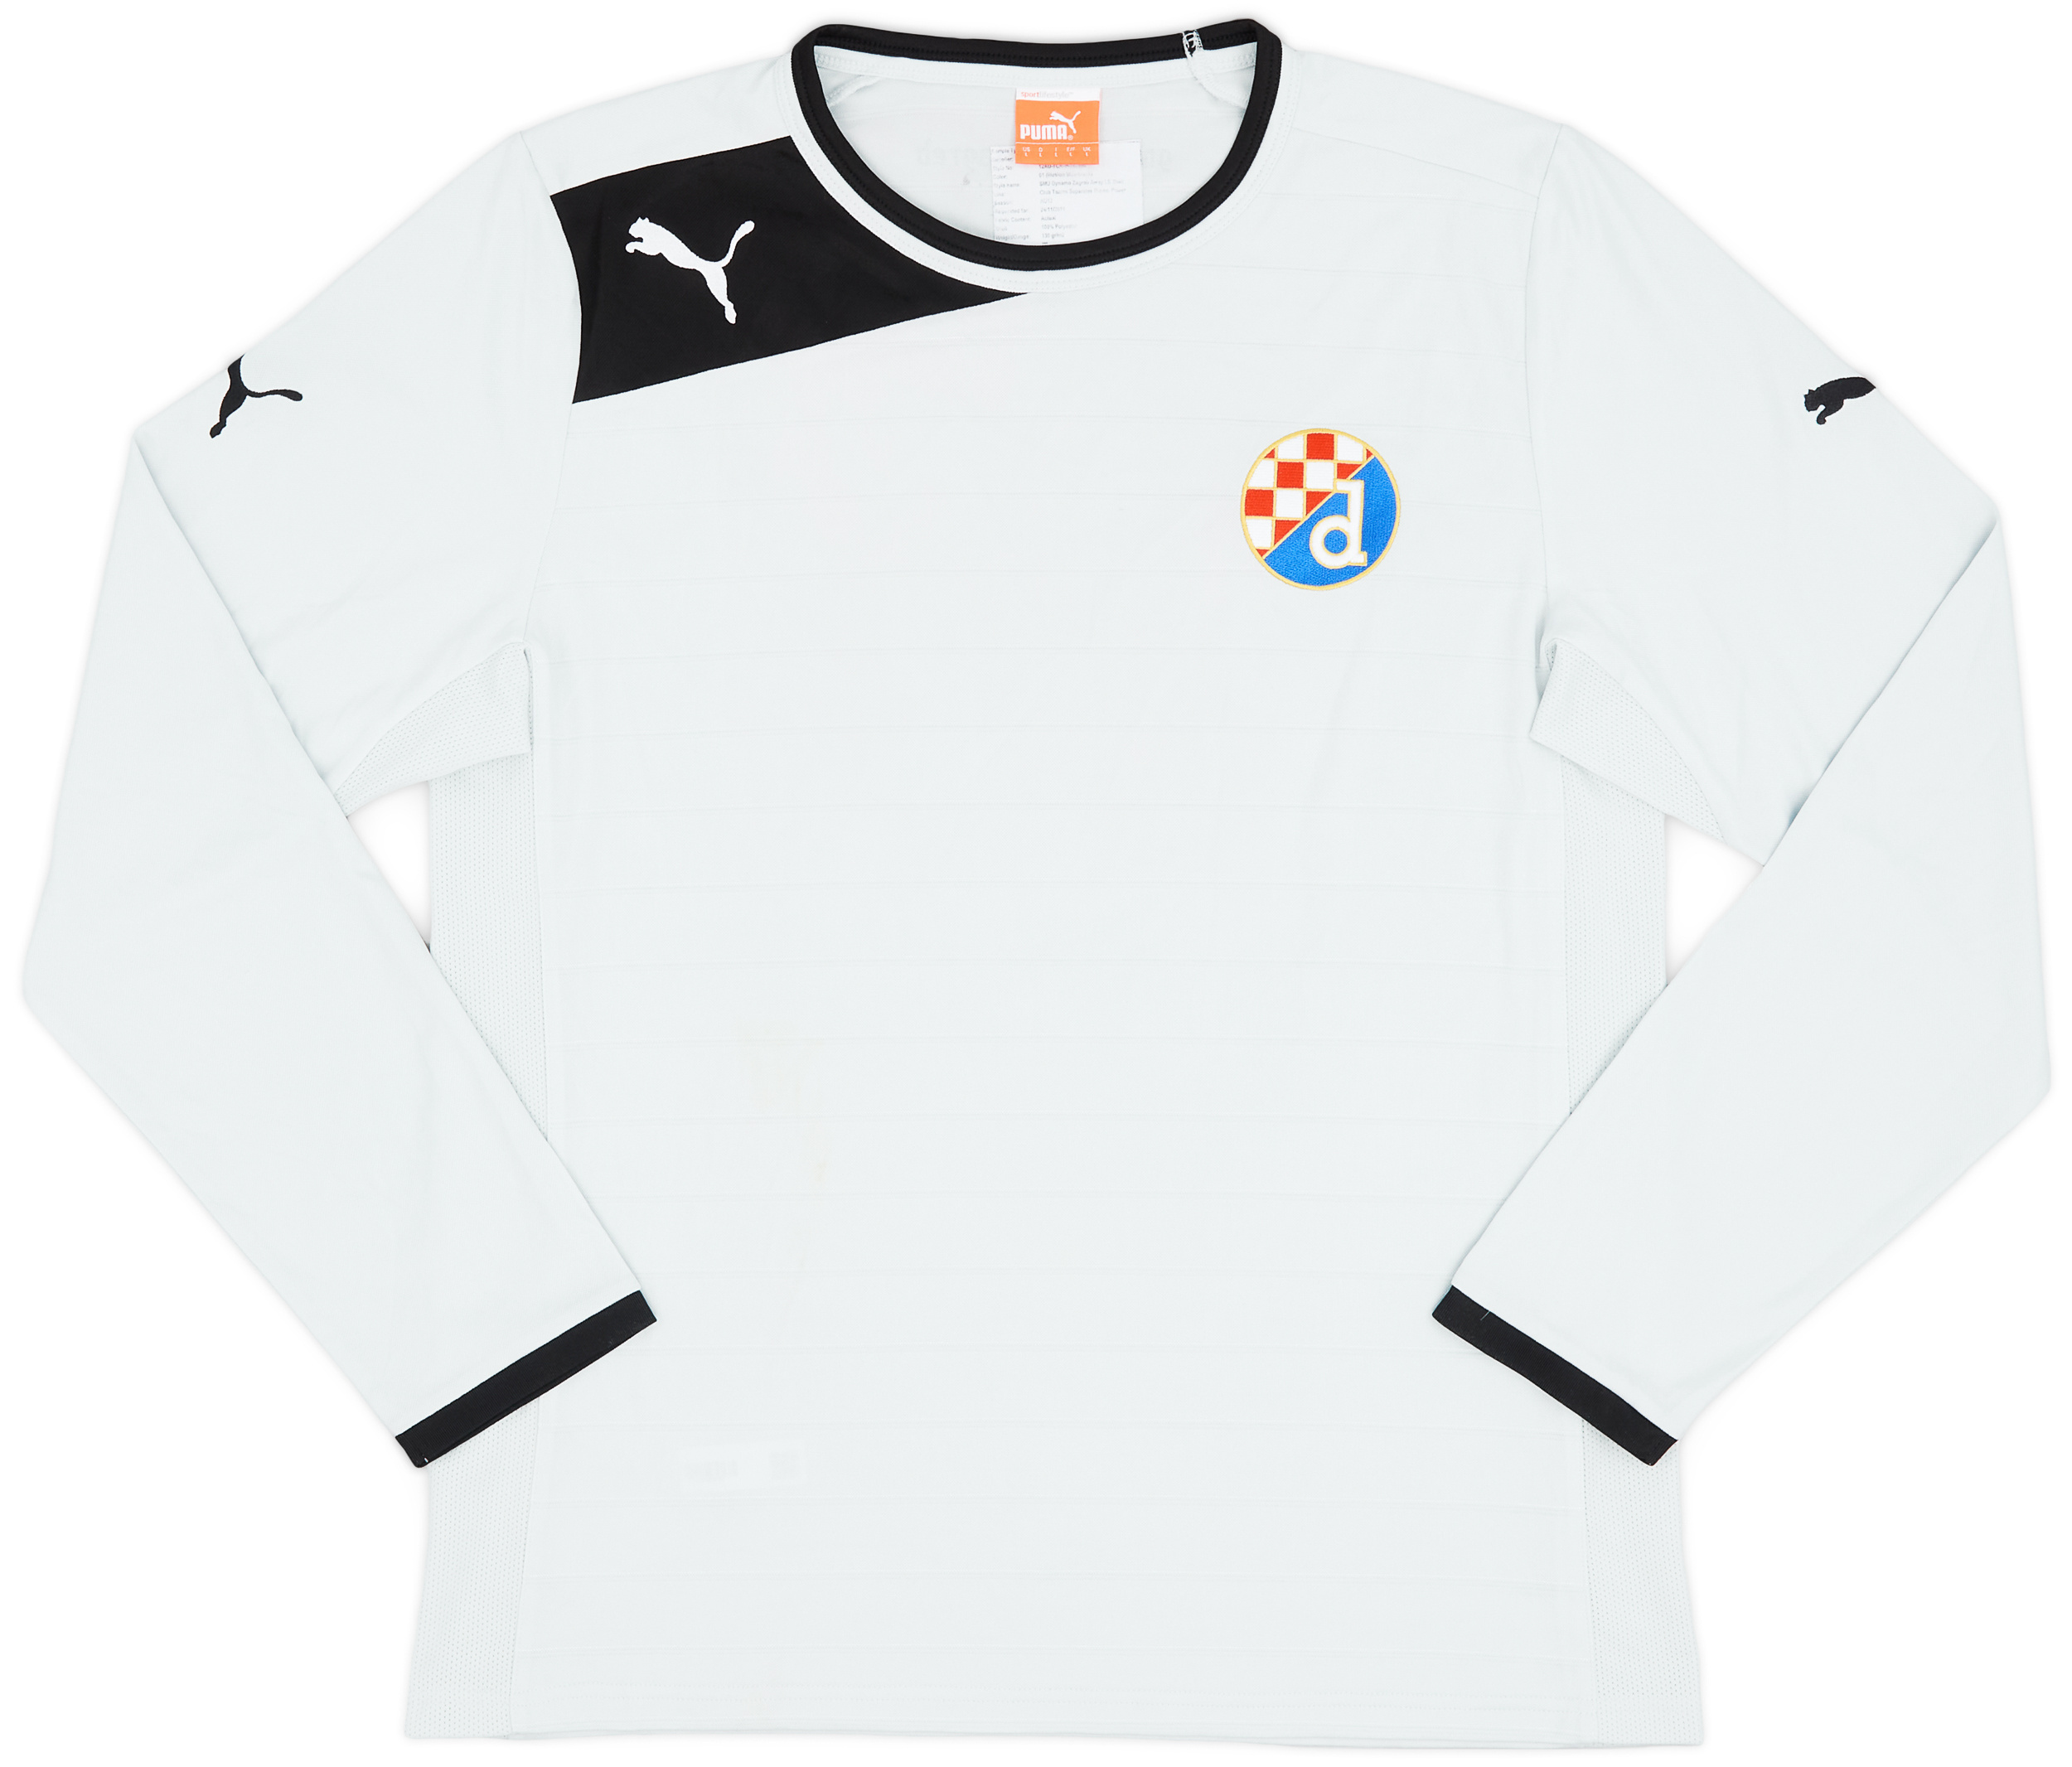 Dinamo Zagreb  Uit  shirt  (Original)